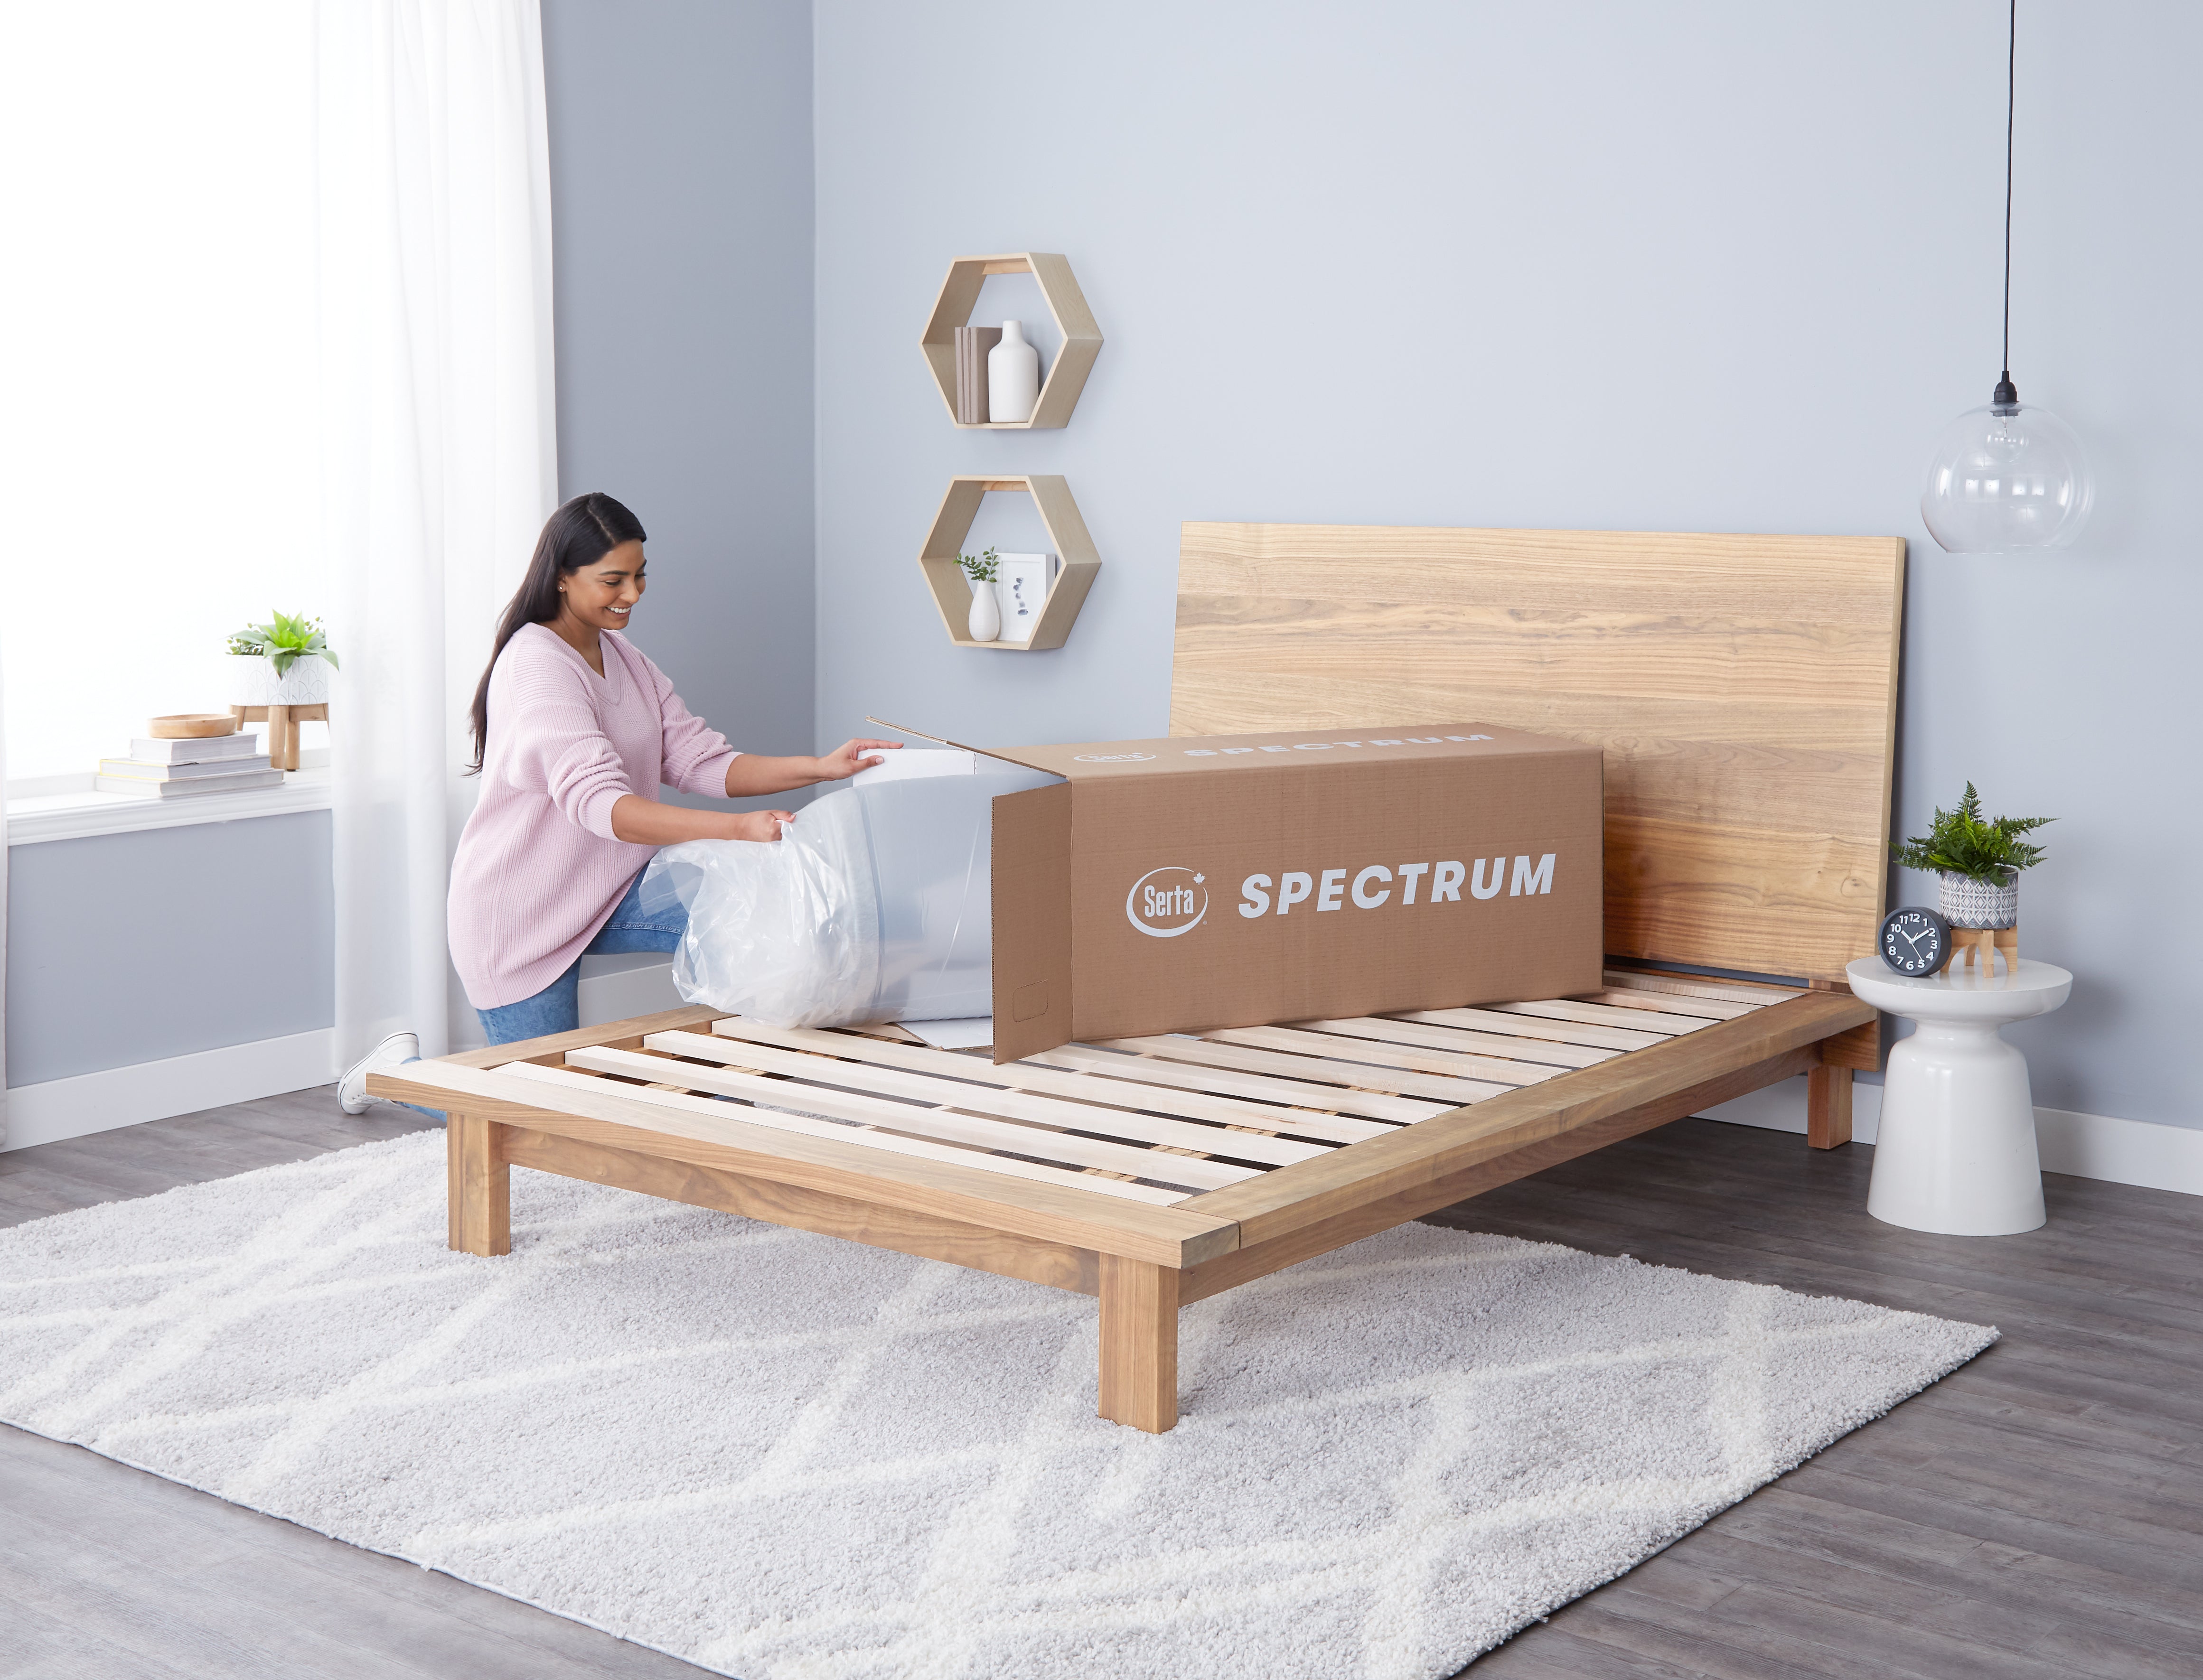 Serta-Spectrum bed in a box-Queensway Mattress